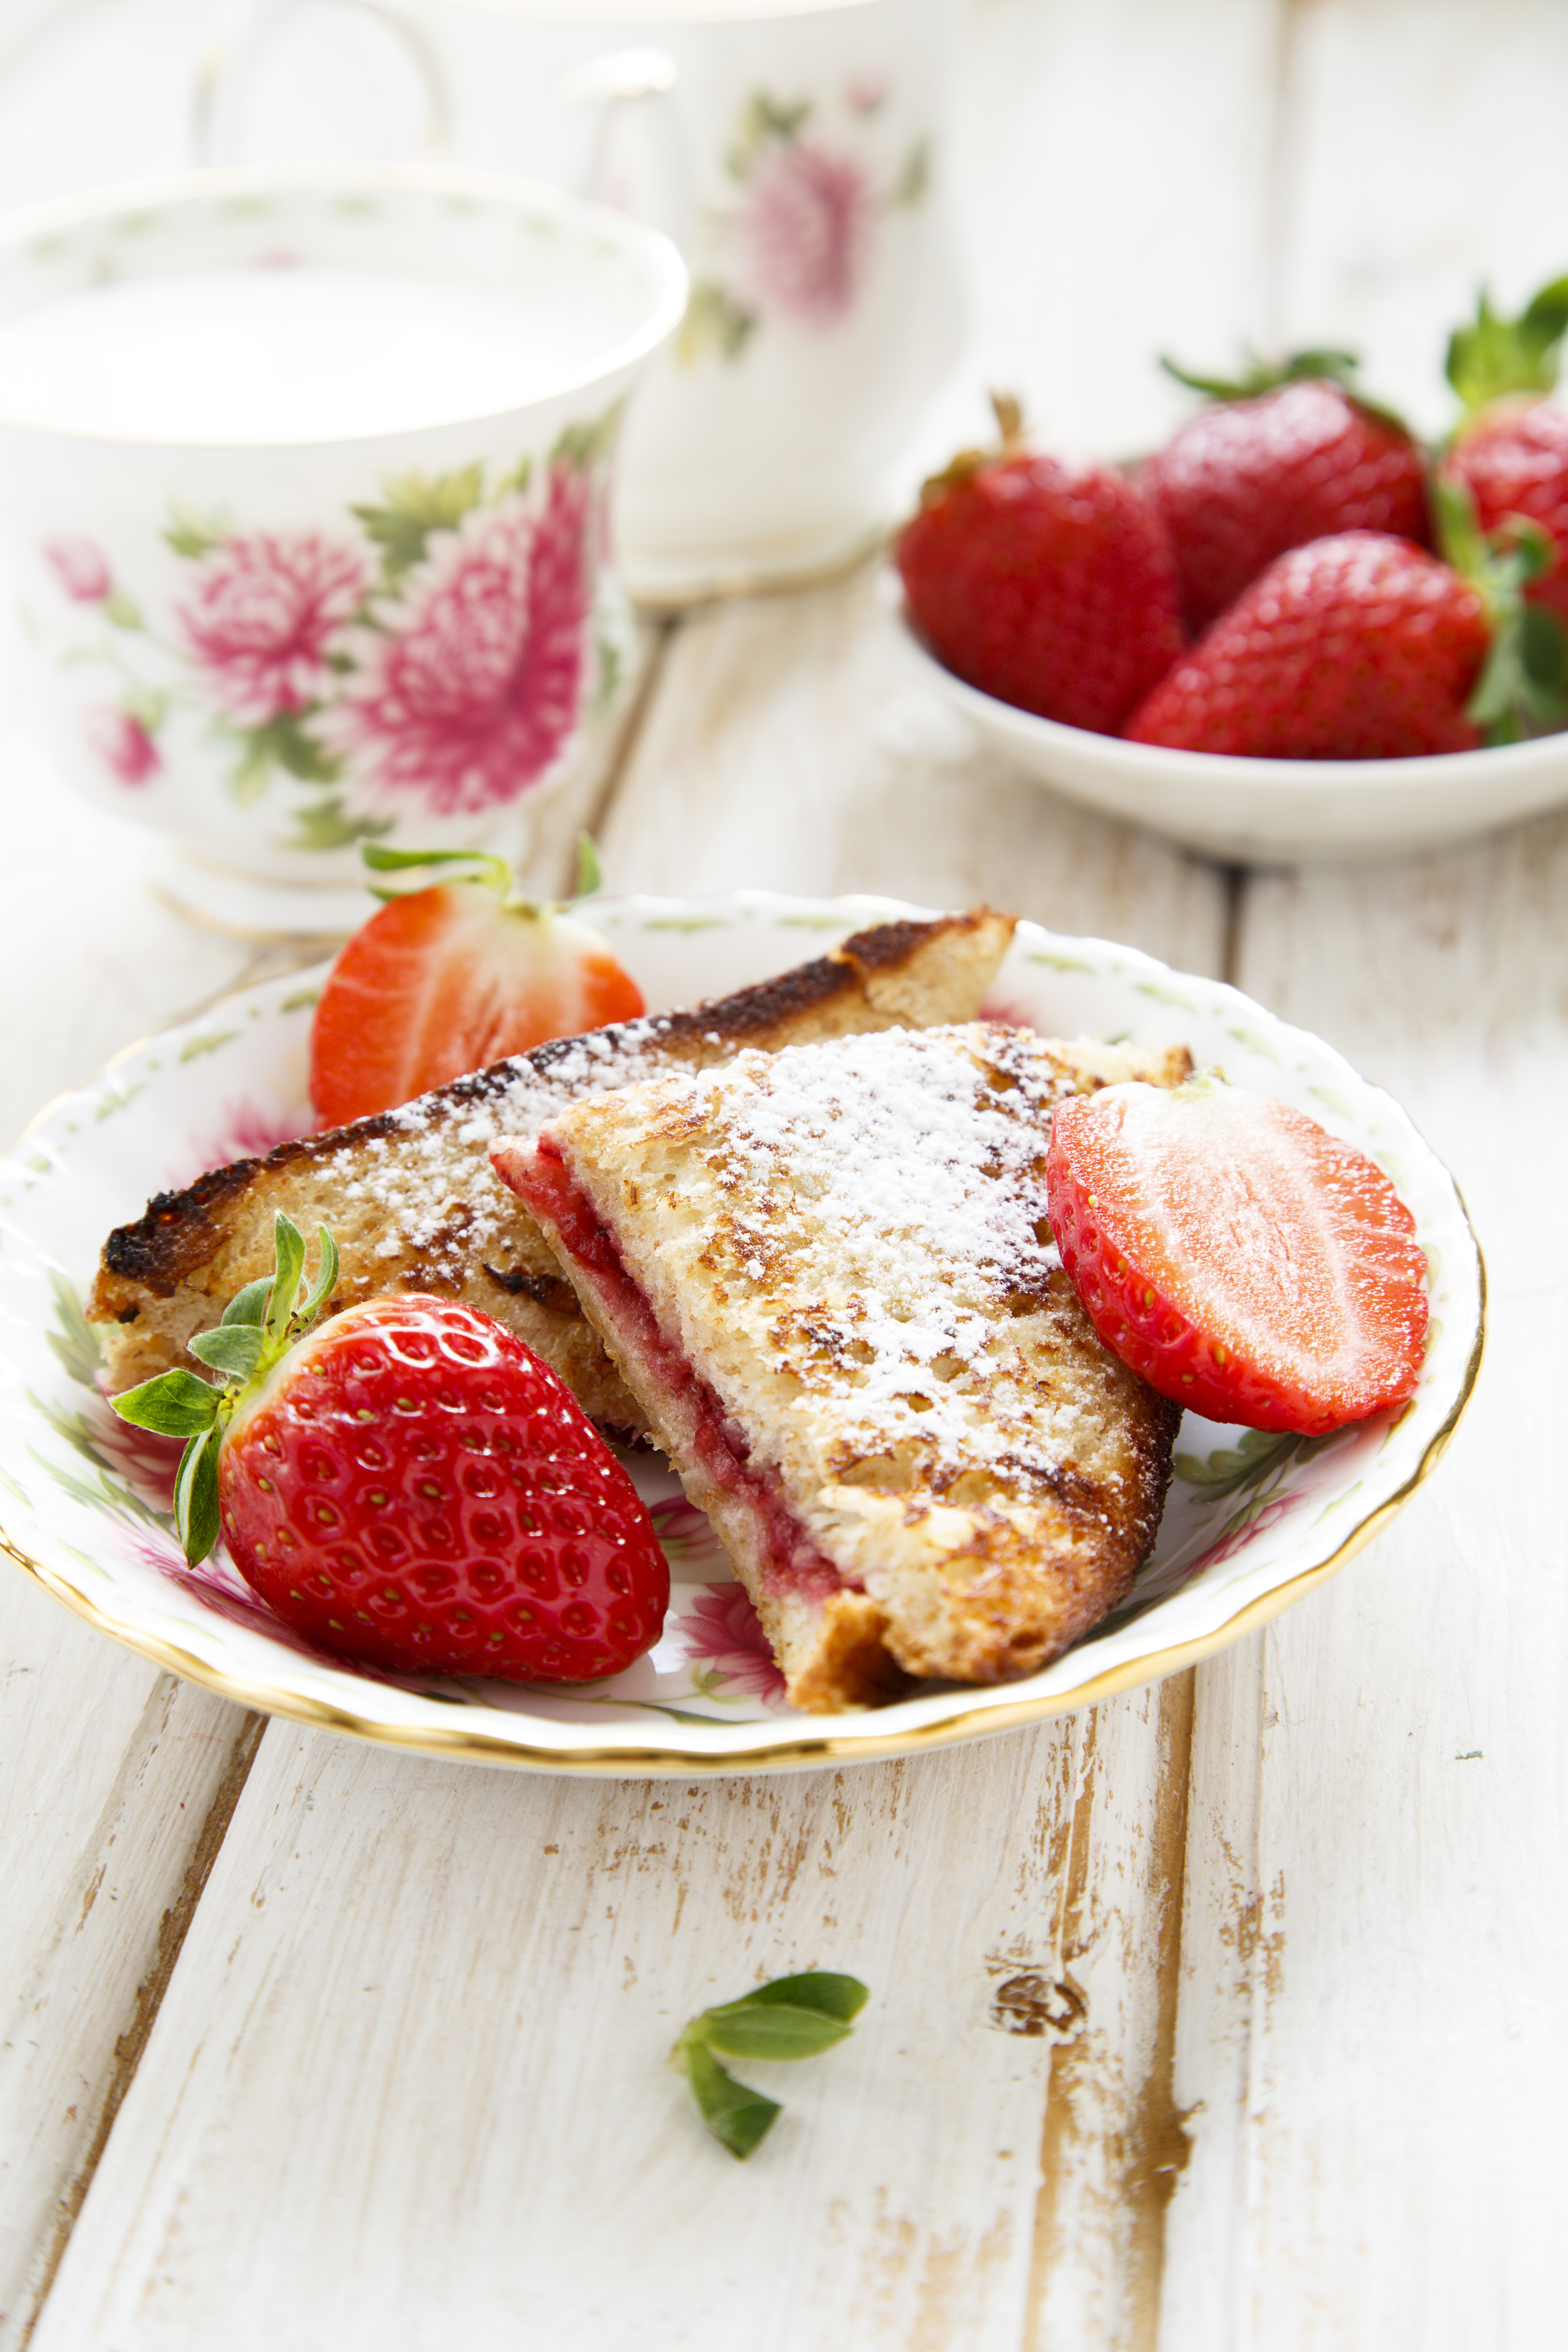 Strawberry-Stuffed French Toast